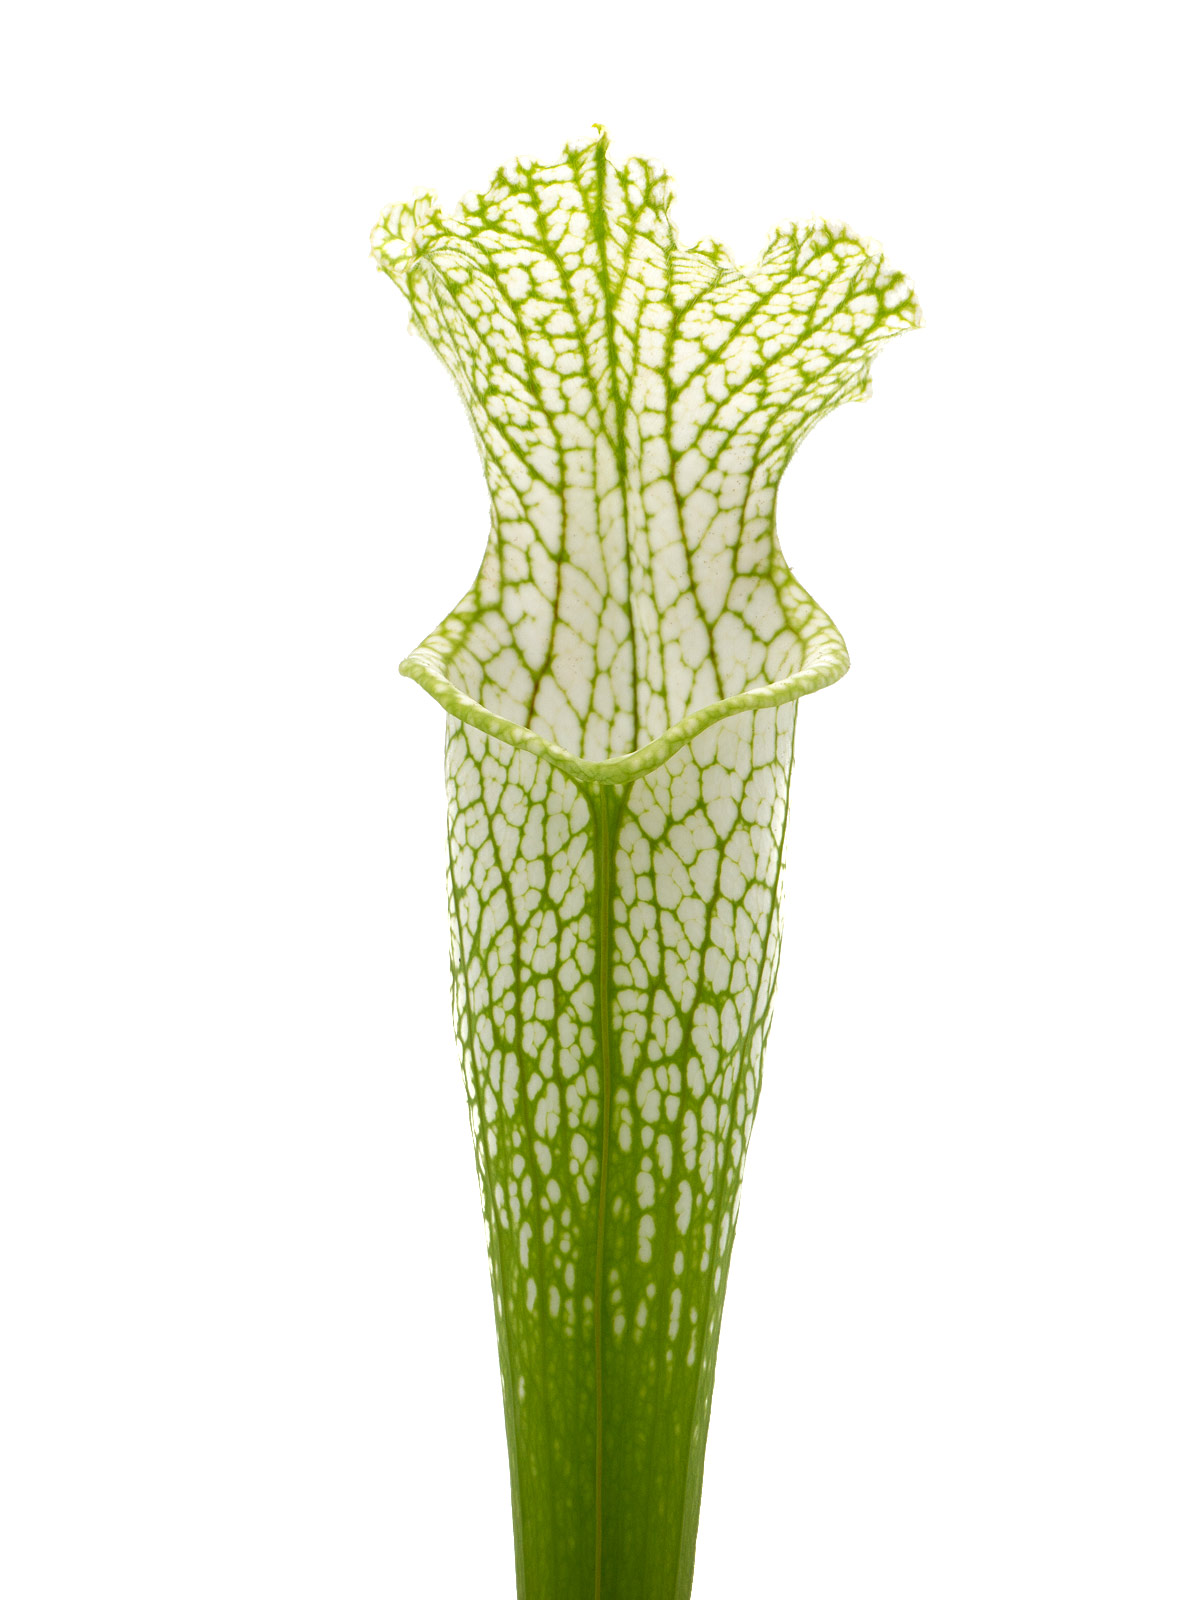 Sarracenia leucophylla - MK L139, `Schnell´s Ghost´ x leucophylla, yellow flower